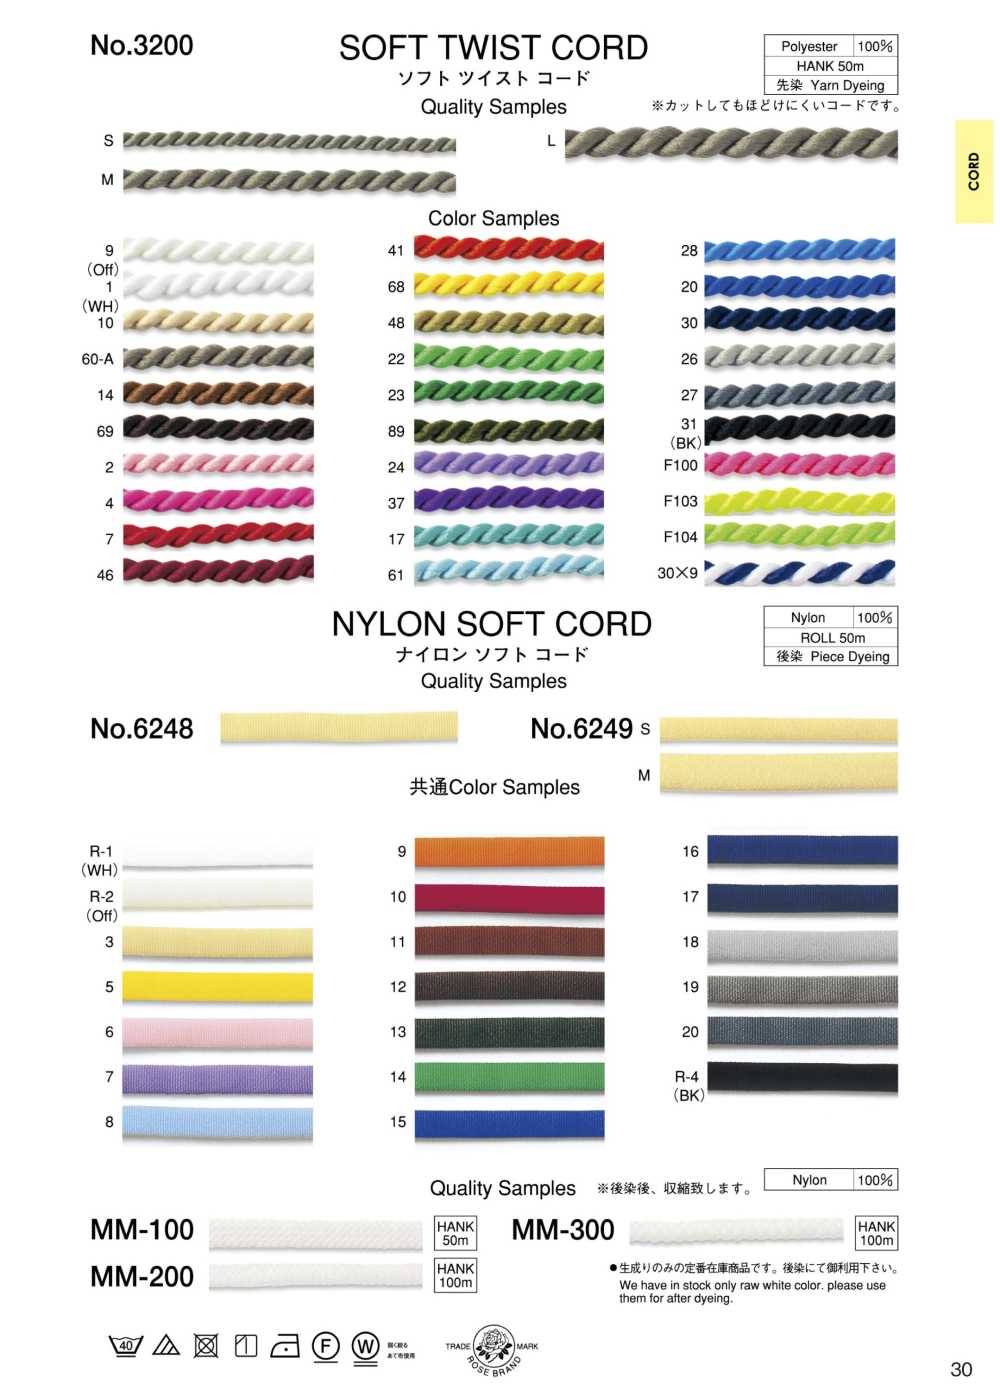 6249 Nylon Soft Cord[Ribbon Tape Cord] ROSE BRAND (Marushin)